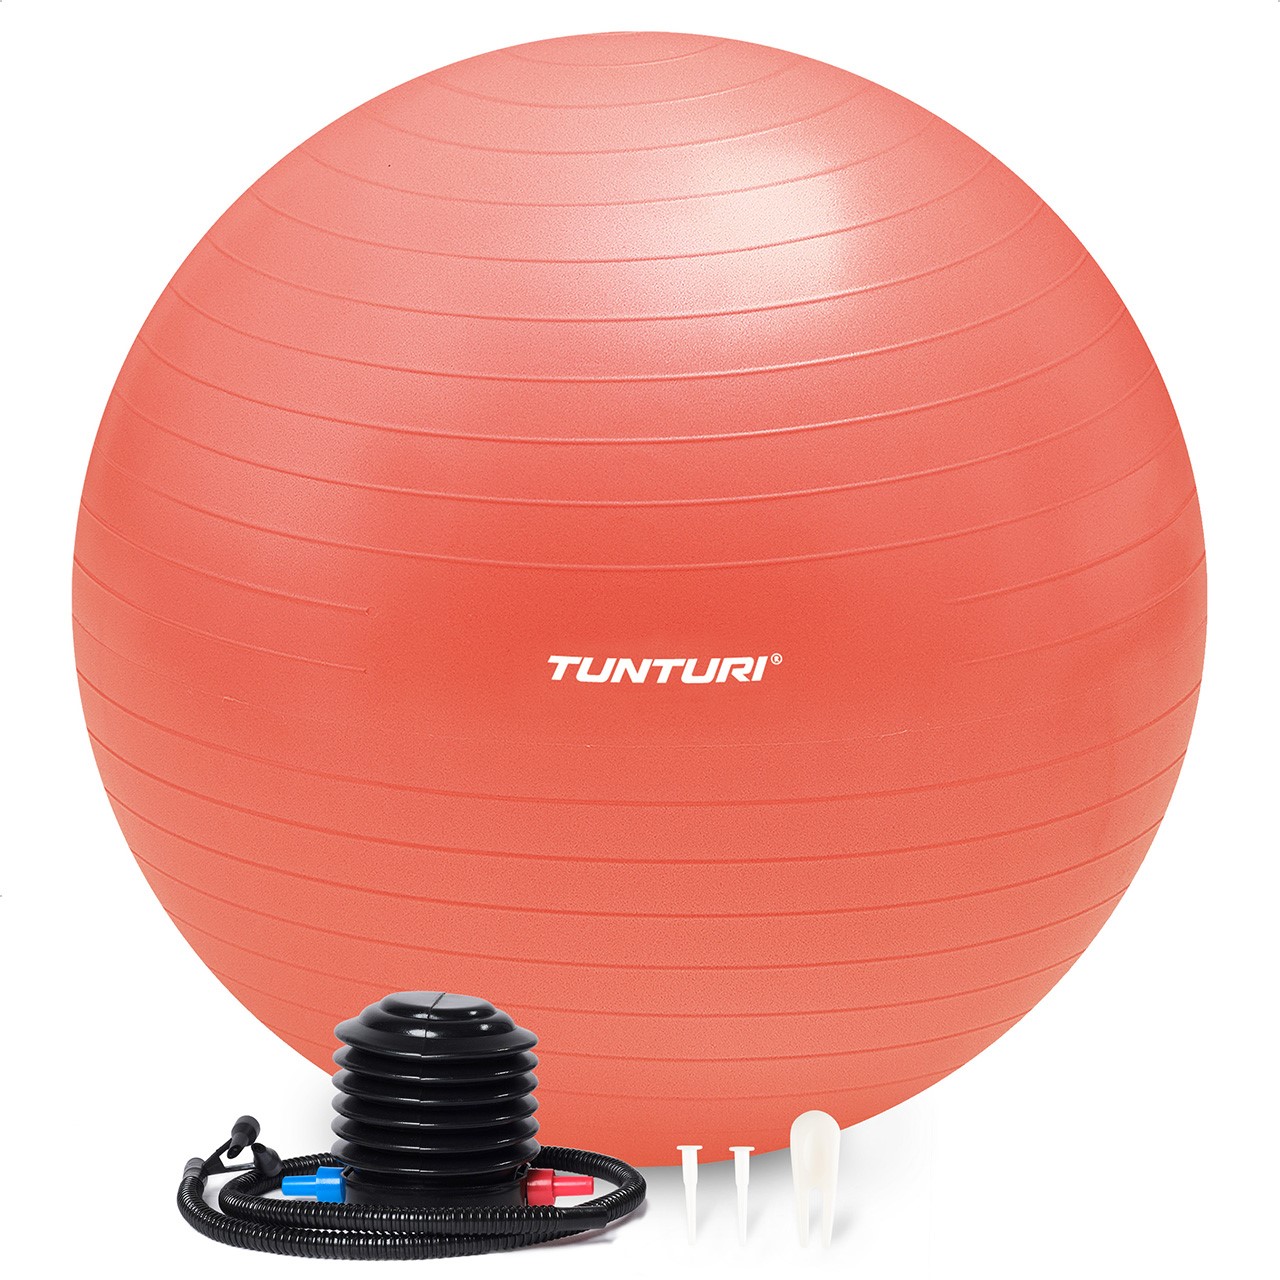 Tunturi Gym Ball - Fitnessball reissfest ABS 75 cm Orange